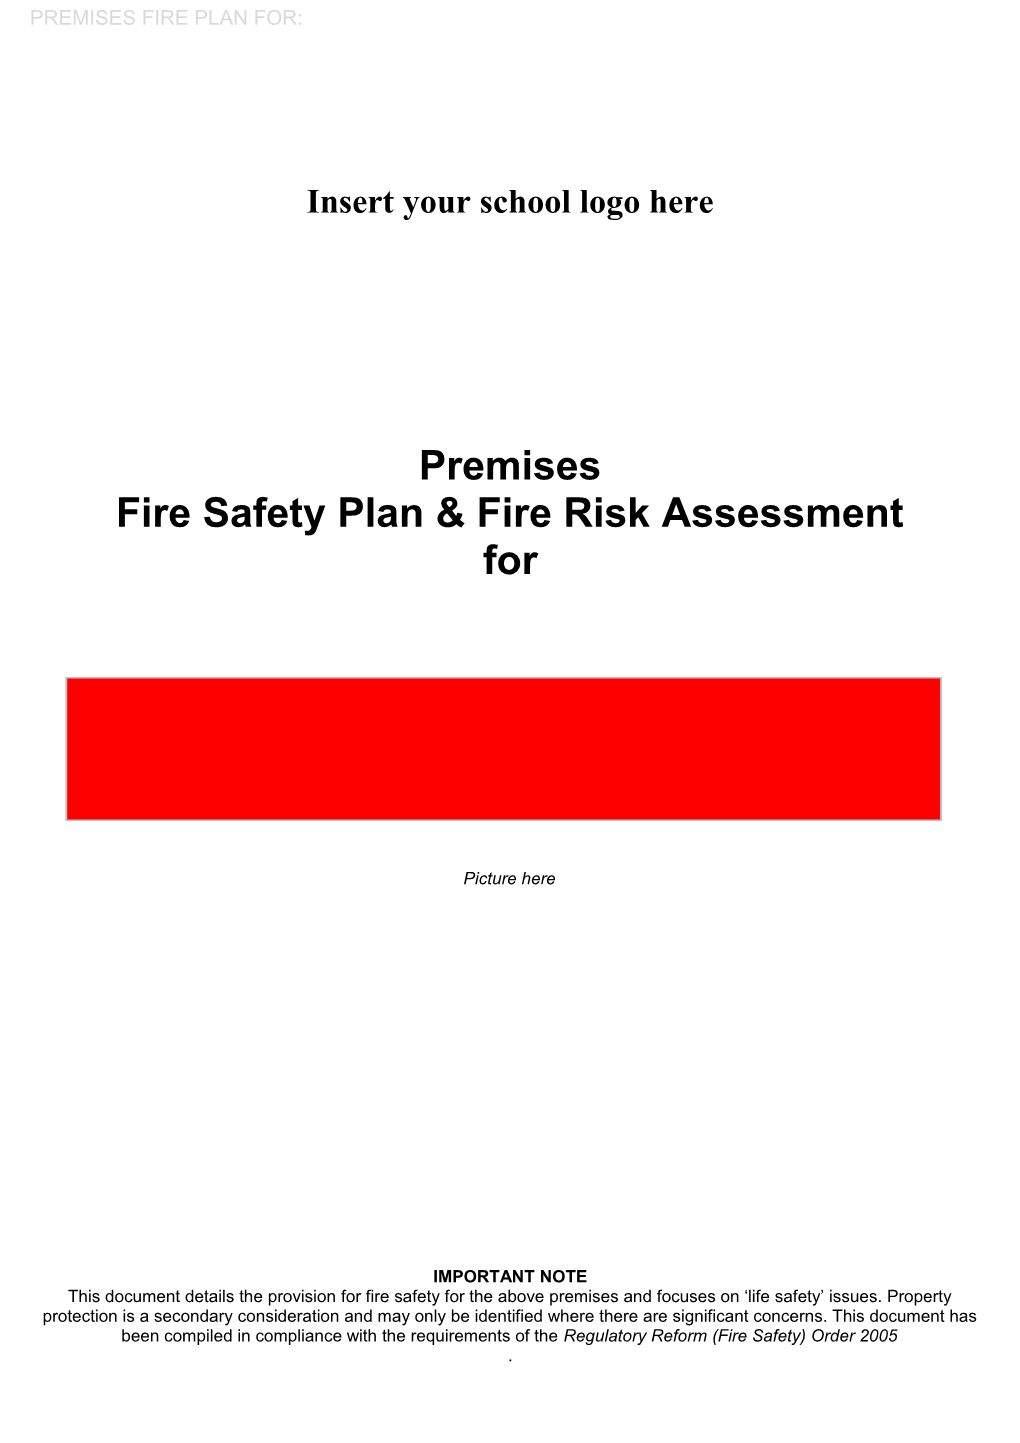 Fire Safety Plan & Risk Assessment